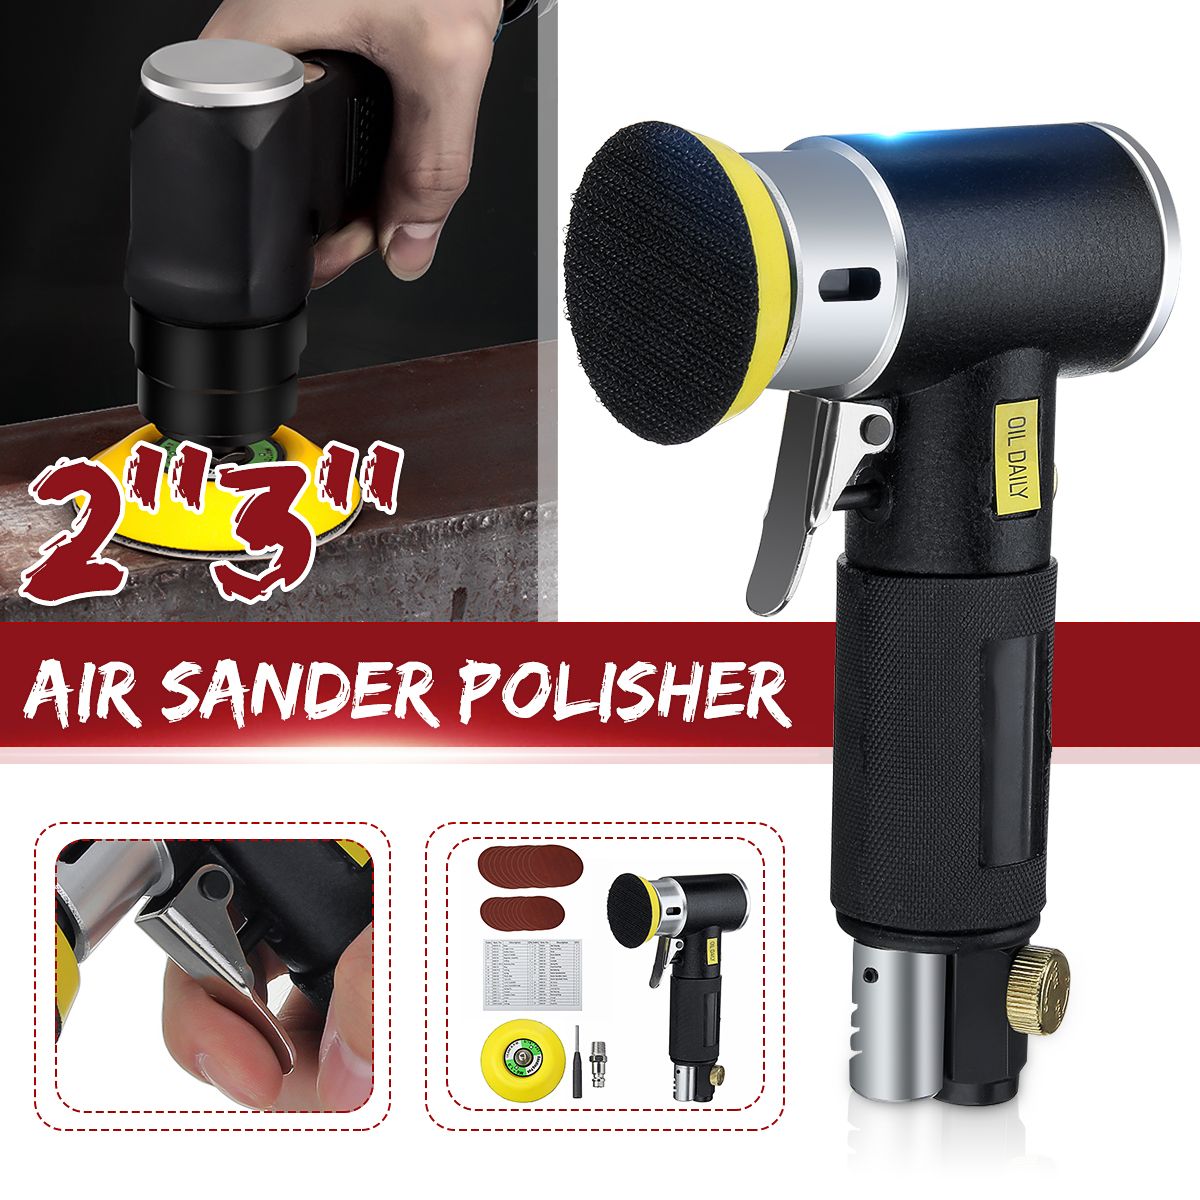 2-3-Mini-Air-Sander-Dual-Action-Random-Air-Orbital-Sander-Polisher-Grinder-Pneumatic-Sander-Sanding--1599952